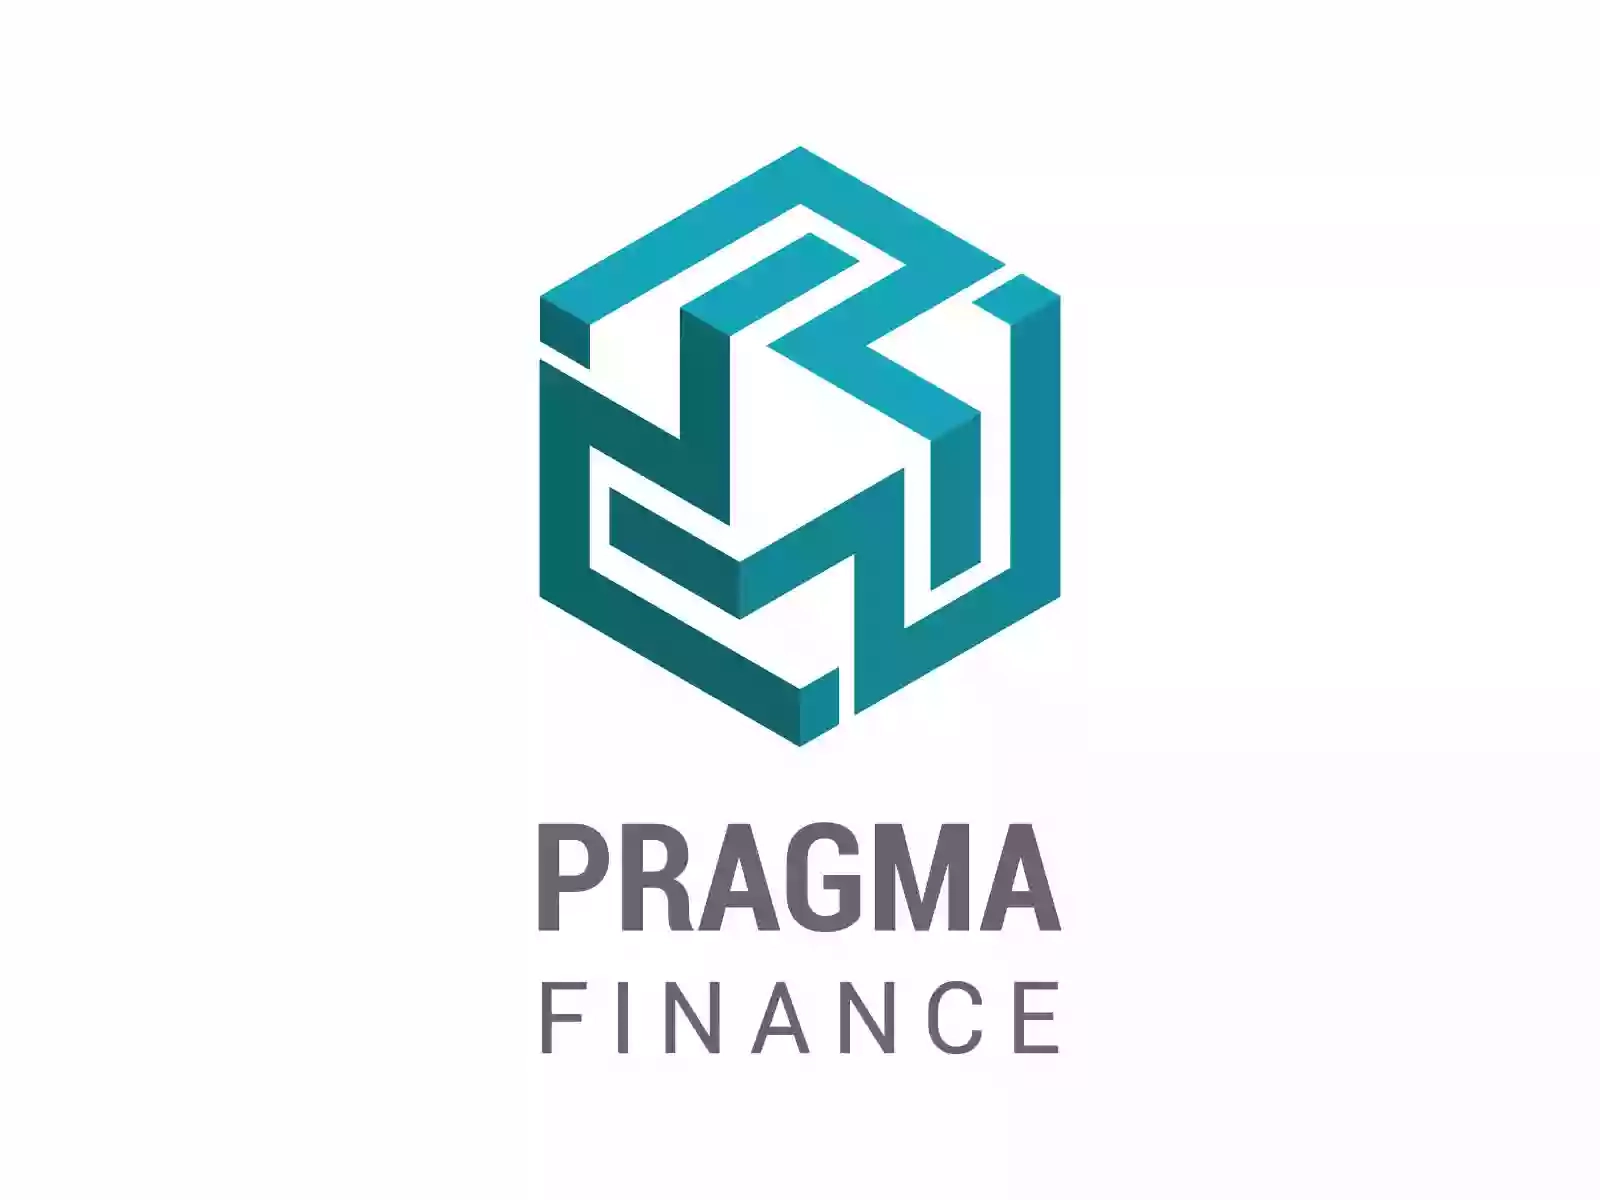 Pragma Finance